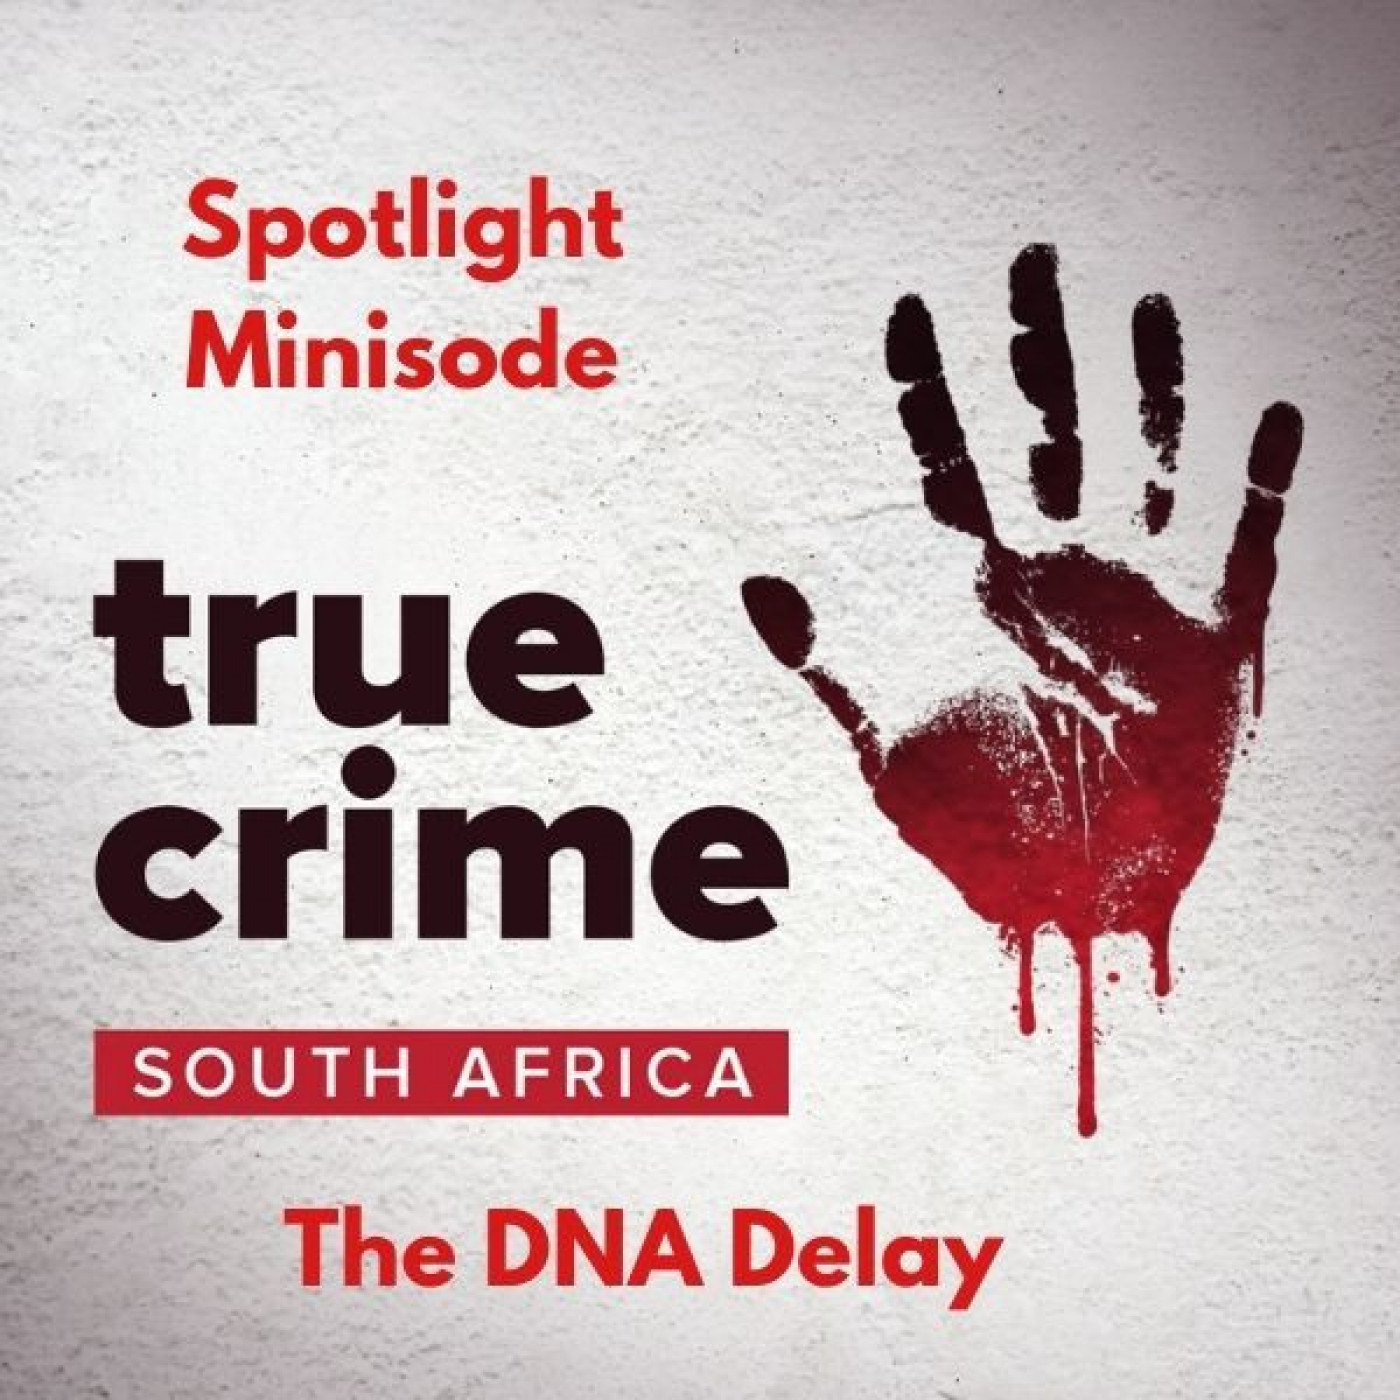 Spotlight Minisode - The DNA Delay